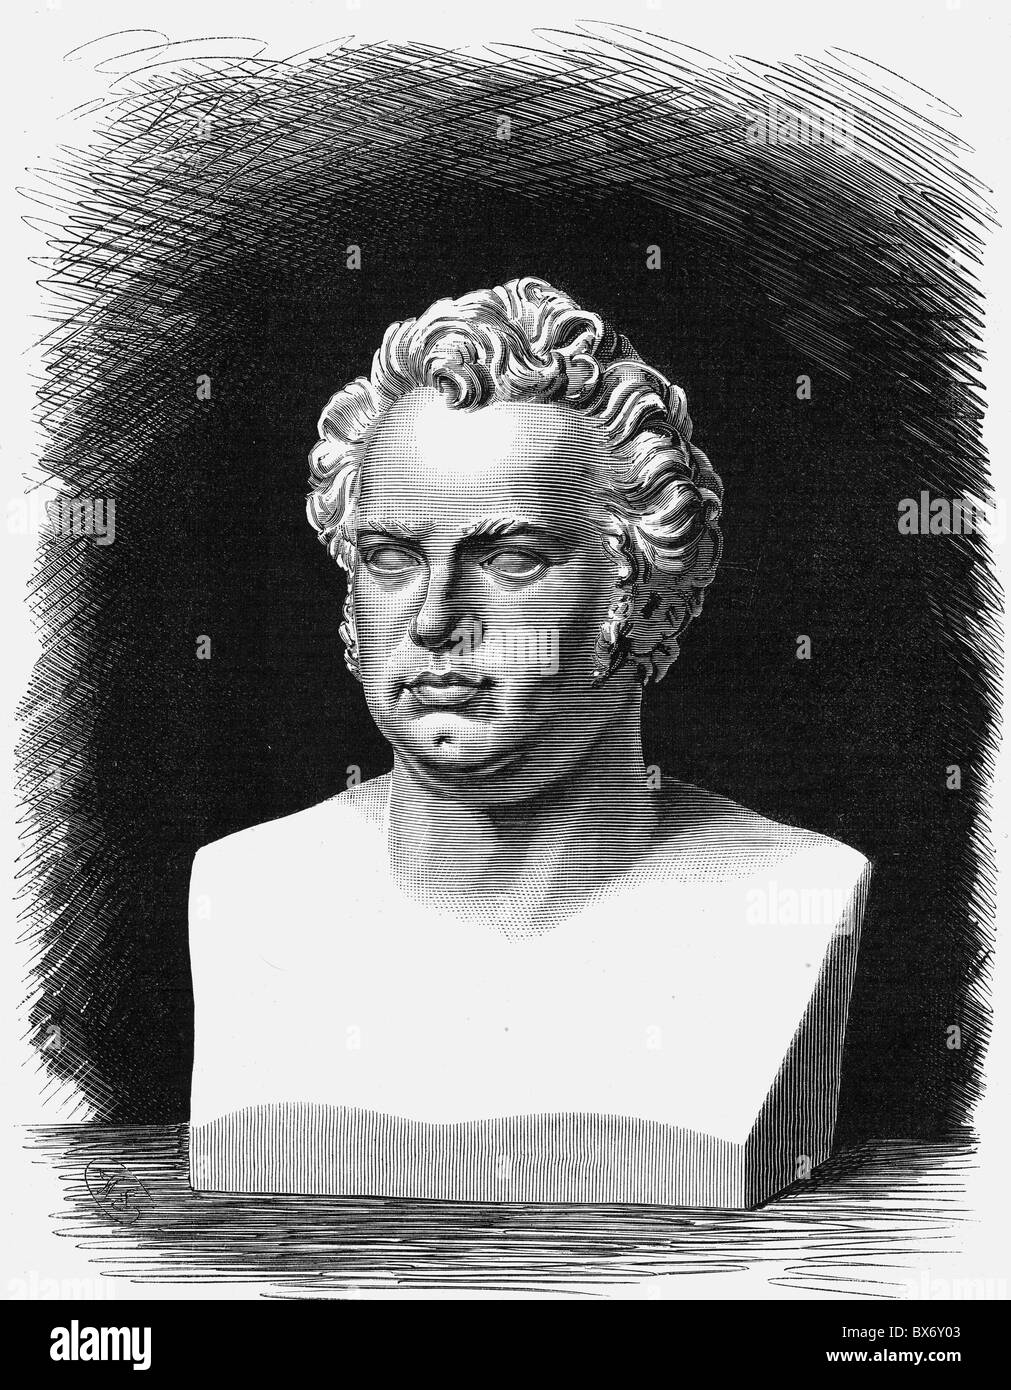 Schubert, Franz, 31.1.1797 - 19.11.1828, Austrian composer, portrait, wood engraving after bust by Gustav Kietz, 1870s, Stock Photo